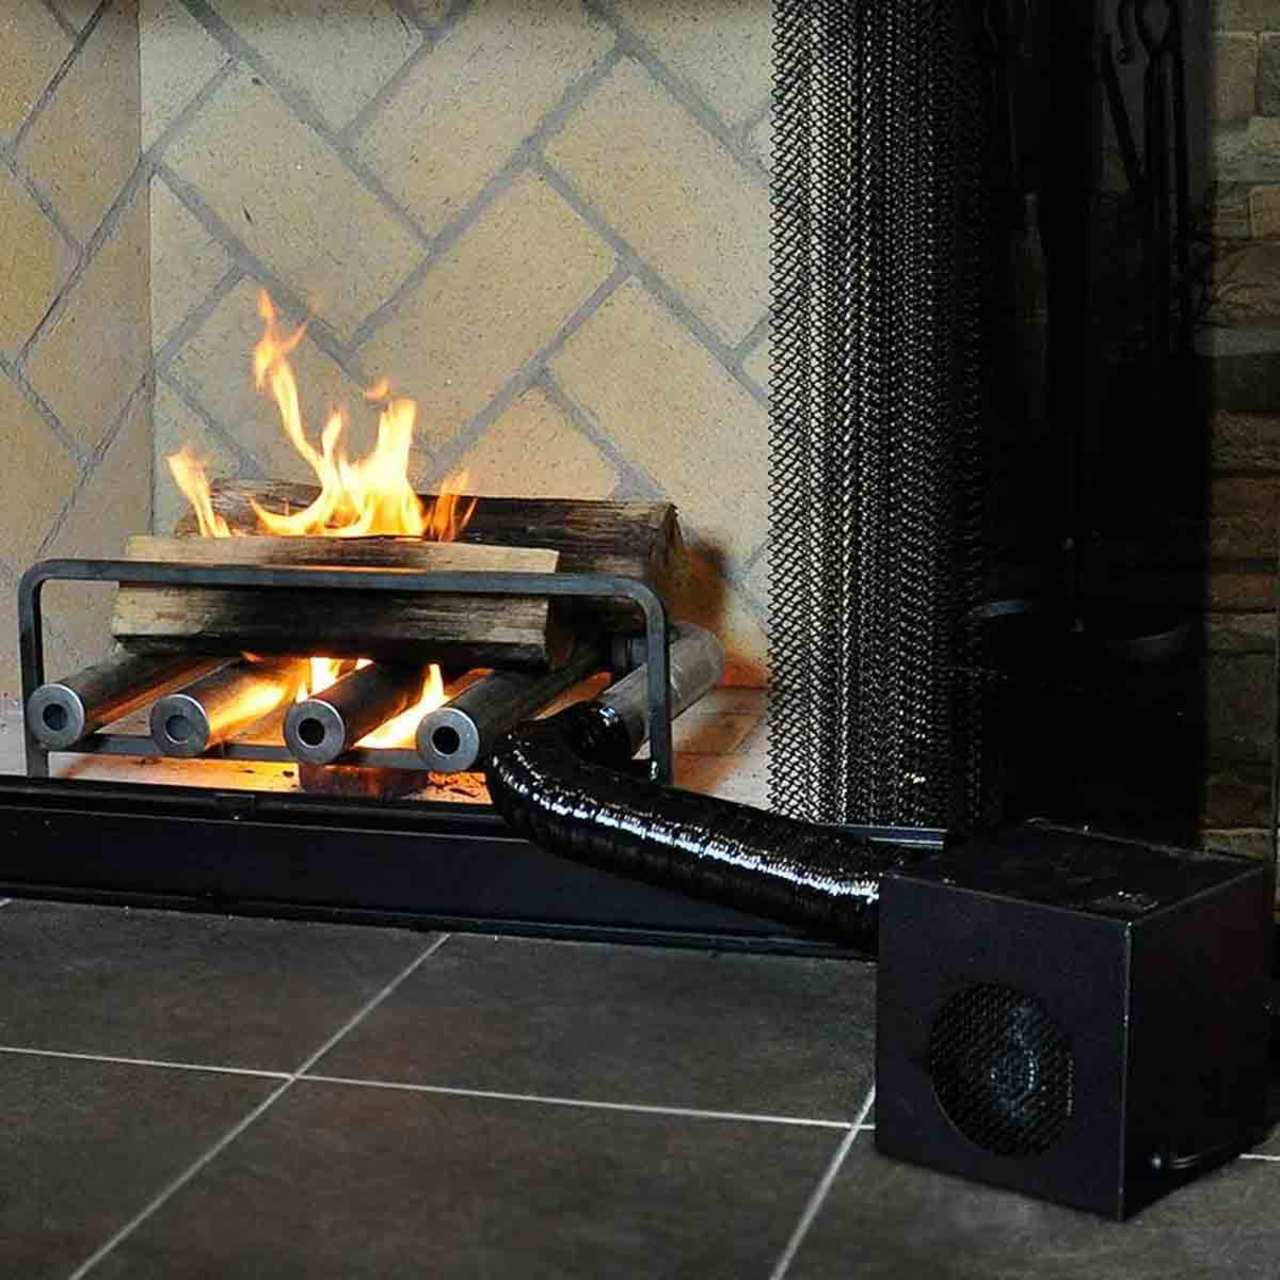 Spitfire Fireplace Heater - 6 Tube w/ Blower